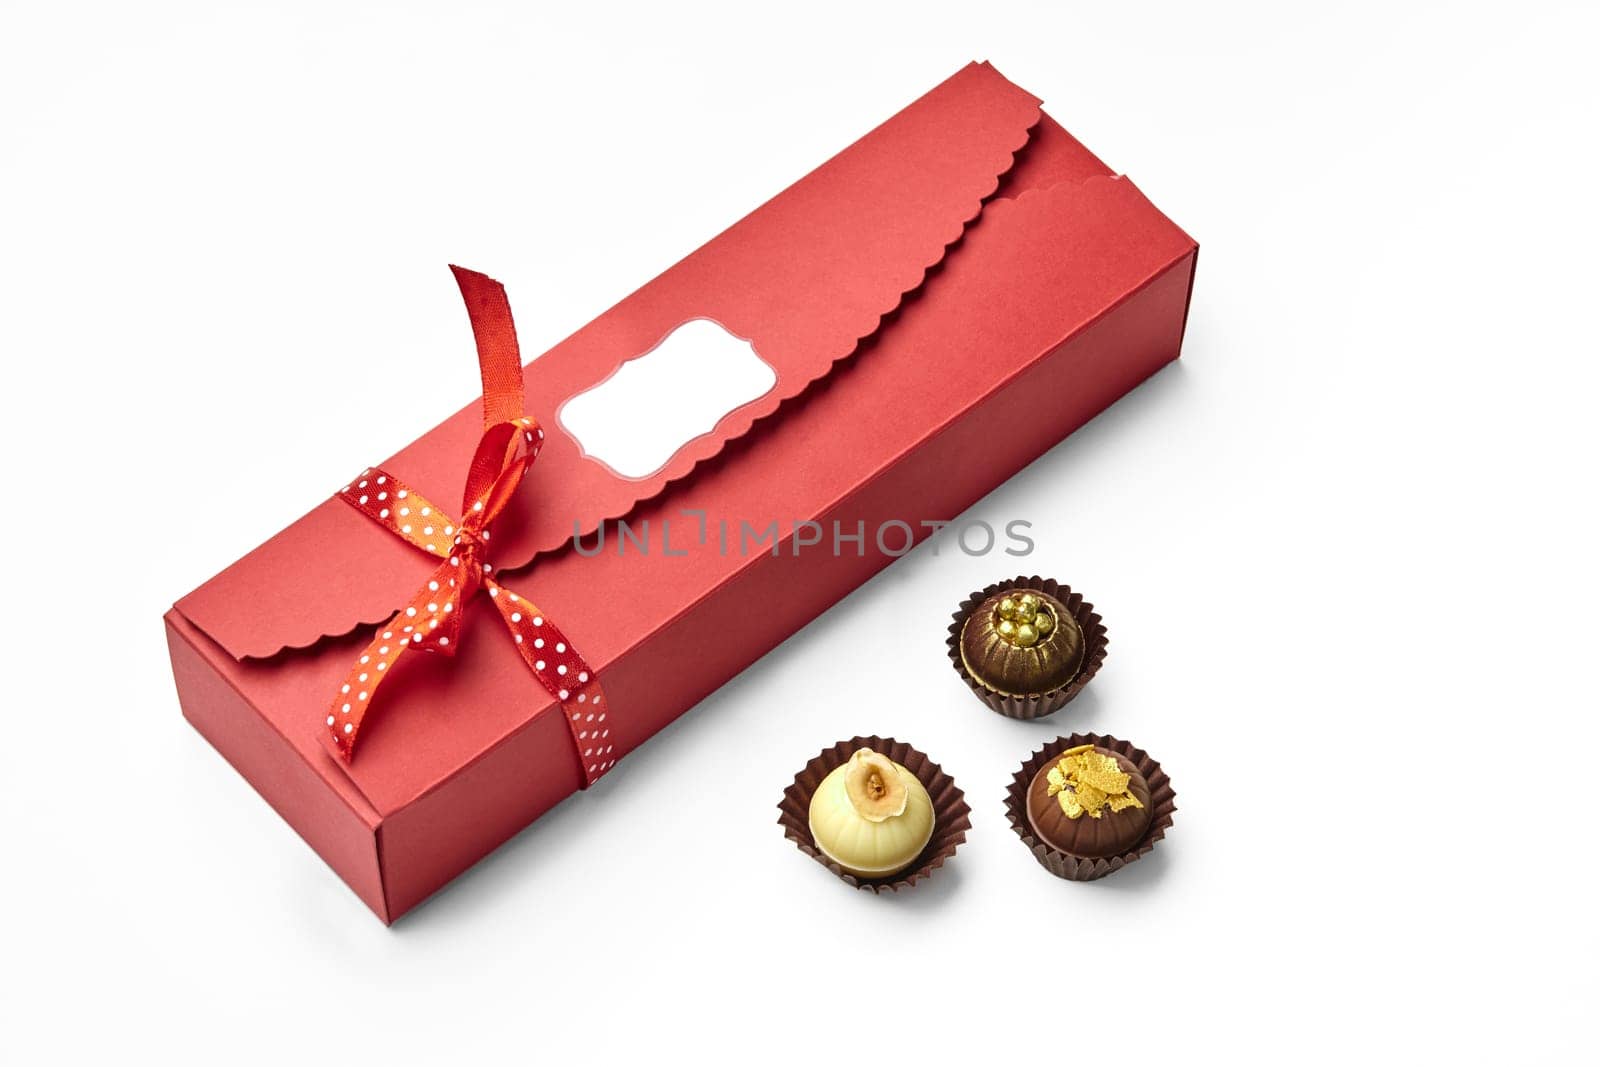 Artisan chocolate candies encased in elegant red gift box by nazarovsergey